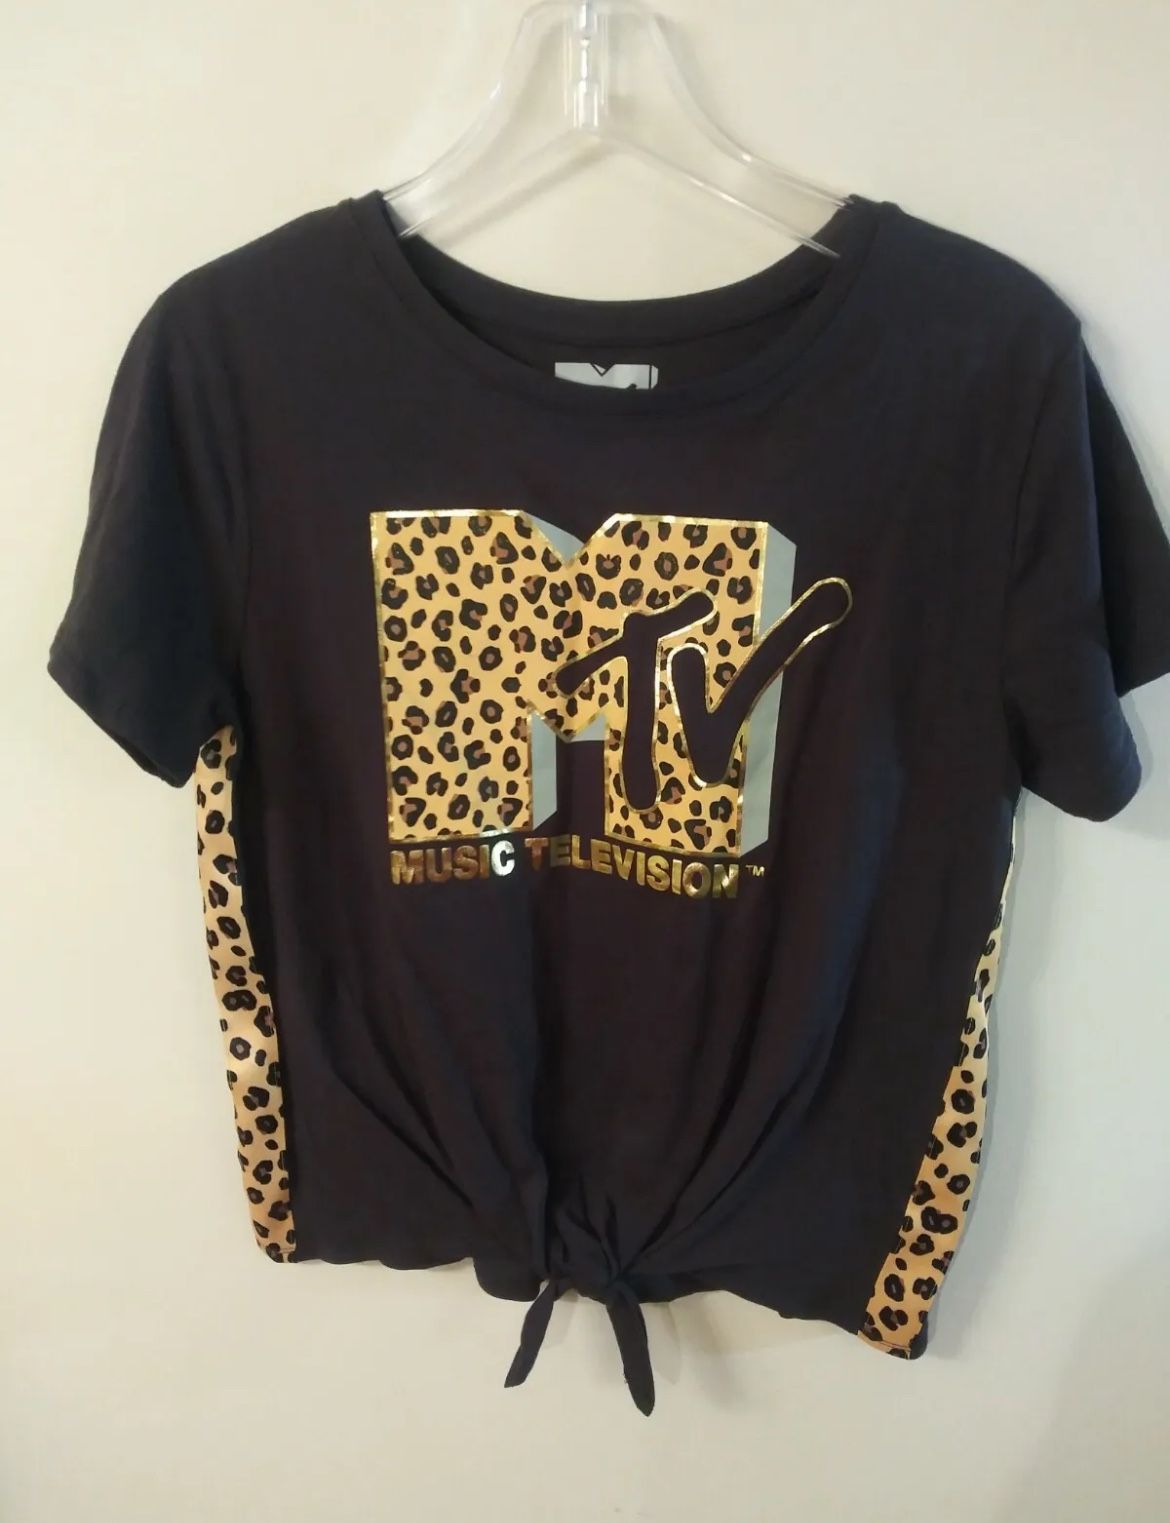 MTV Large Tshirt Top Cheetah Animal Print